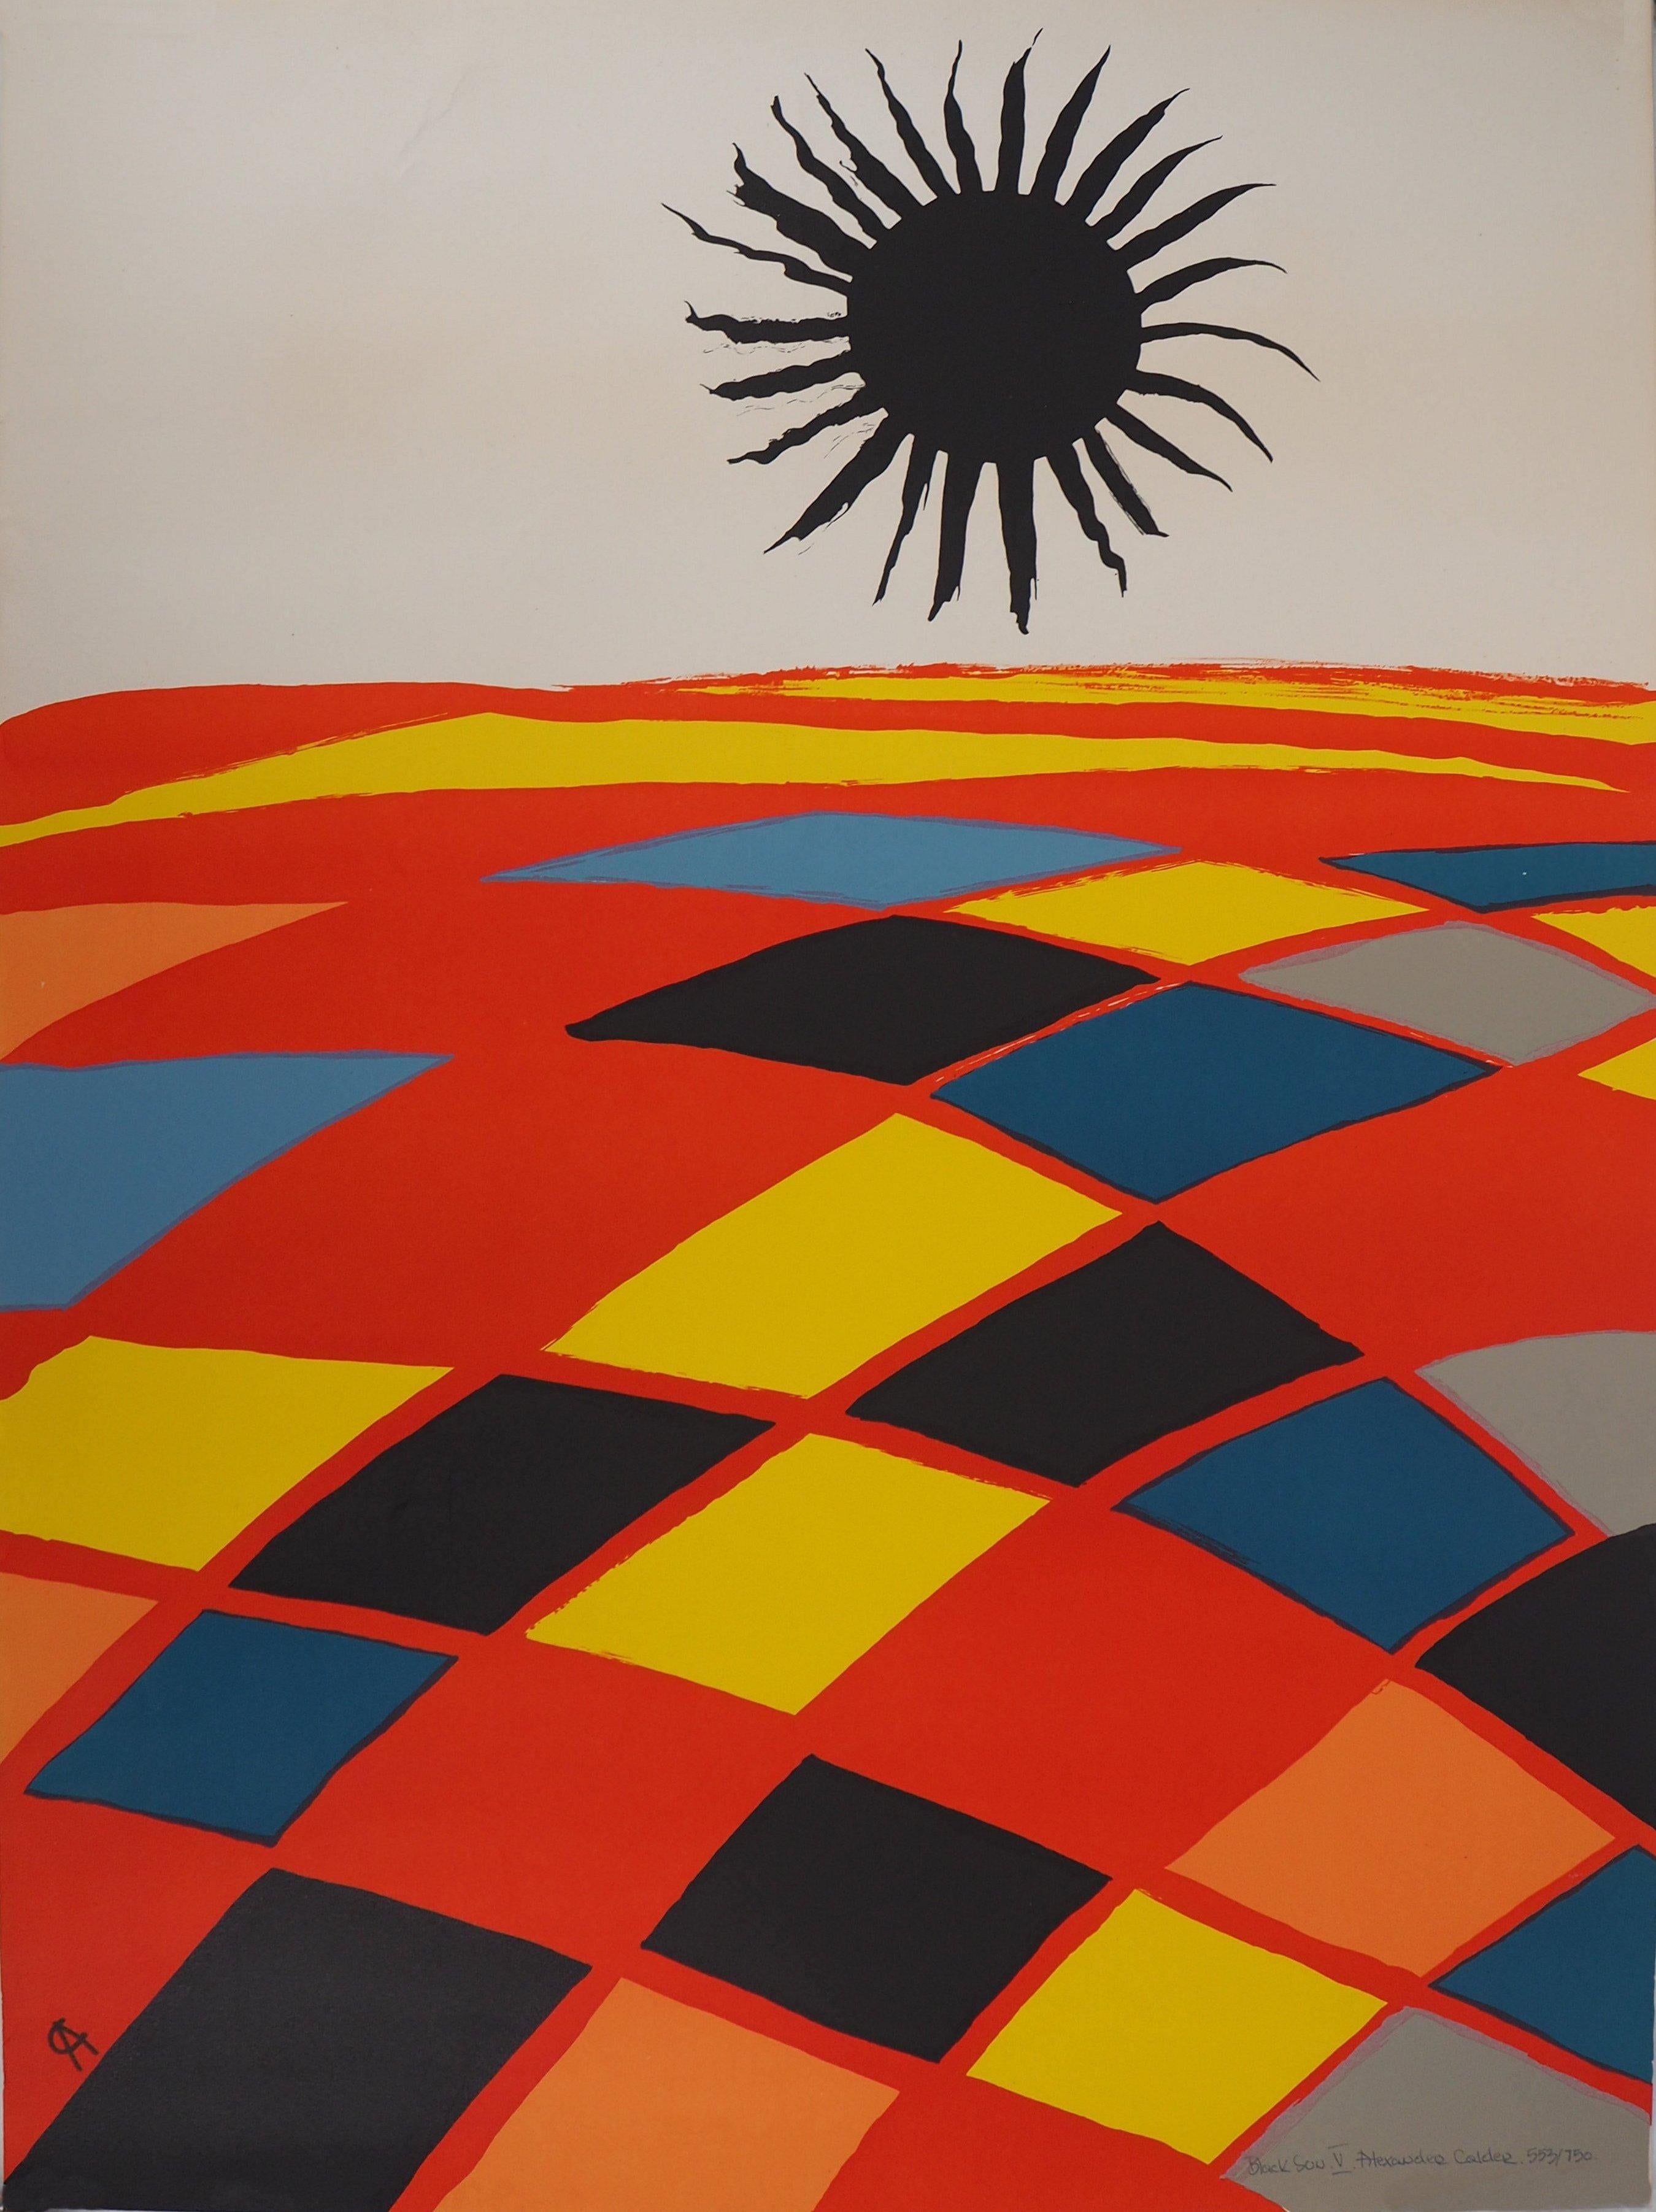 Alexander Calder Abstract Print - Black Sun V - Original lithograph